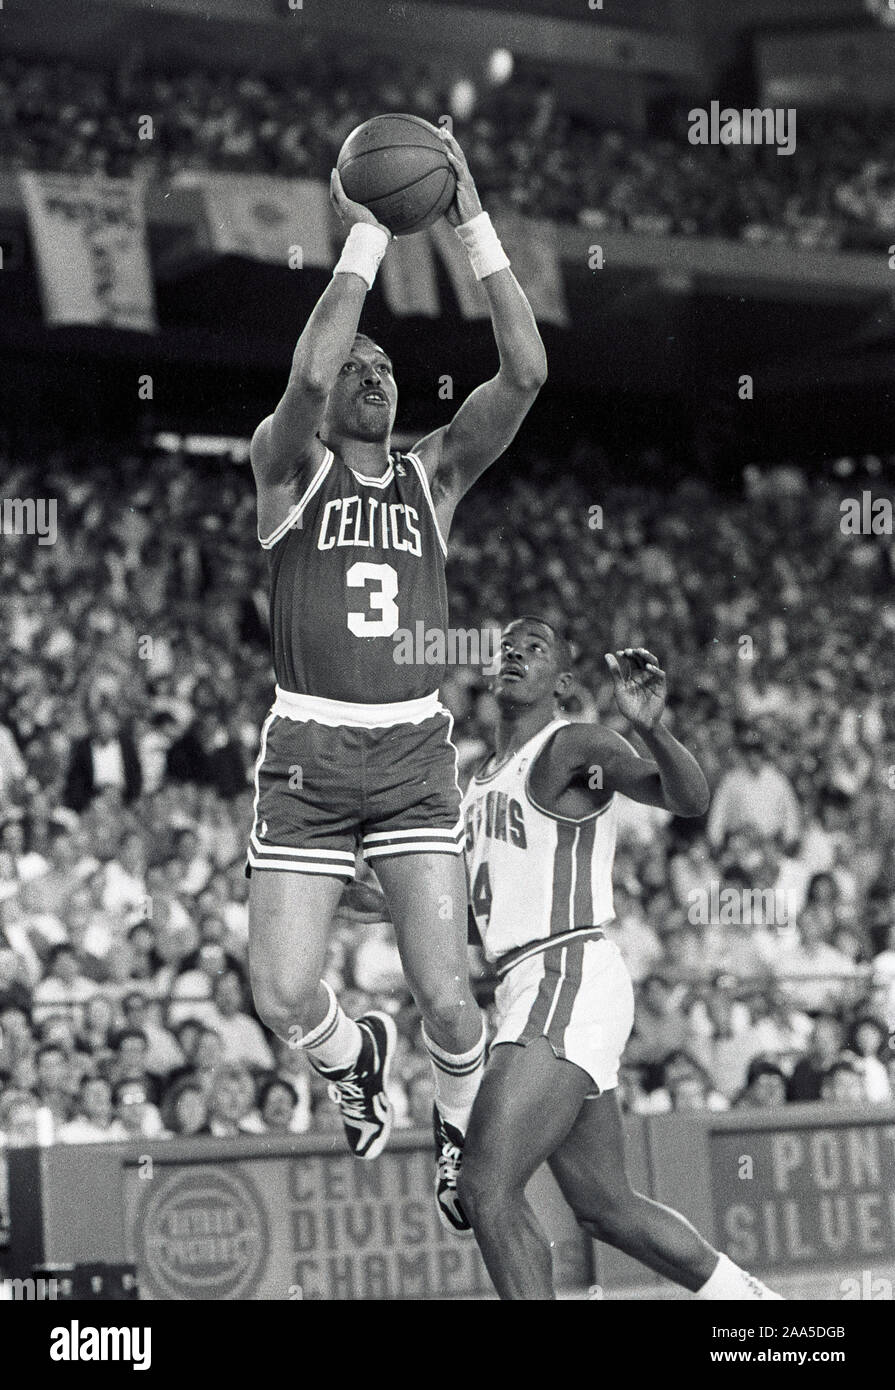 Boston Celtics #3 Dennis Johnson kerben Vergangenheit Detroit Pistons #4 Joe Dumars 1988 NBA Playoffs Spiel Action in Detroit Michigan Mai 1988 Foto von Bill belknap Stockfoto